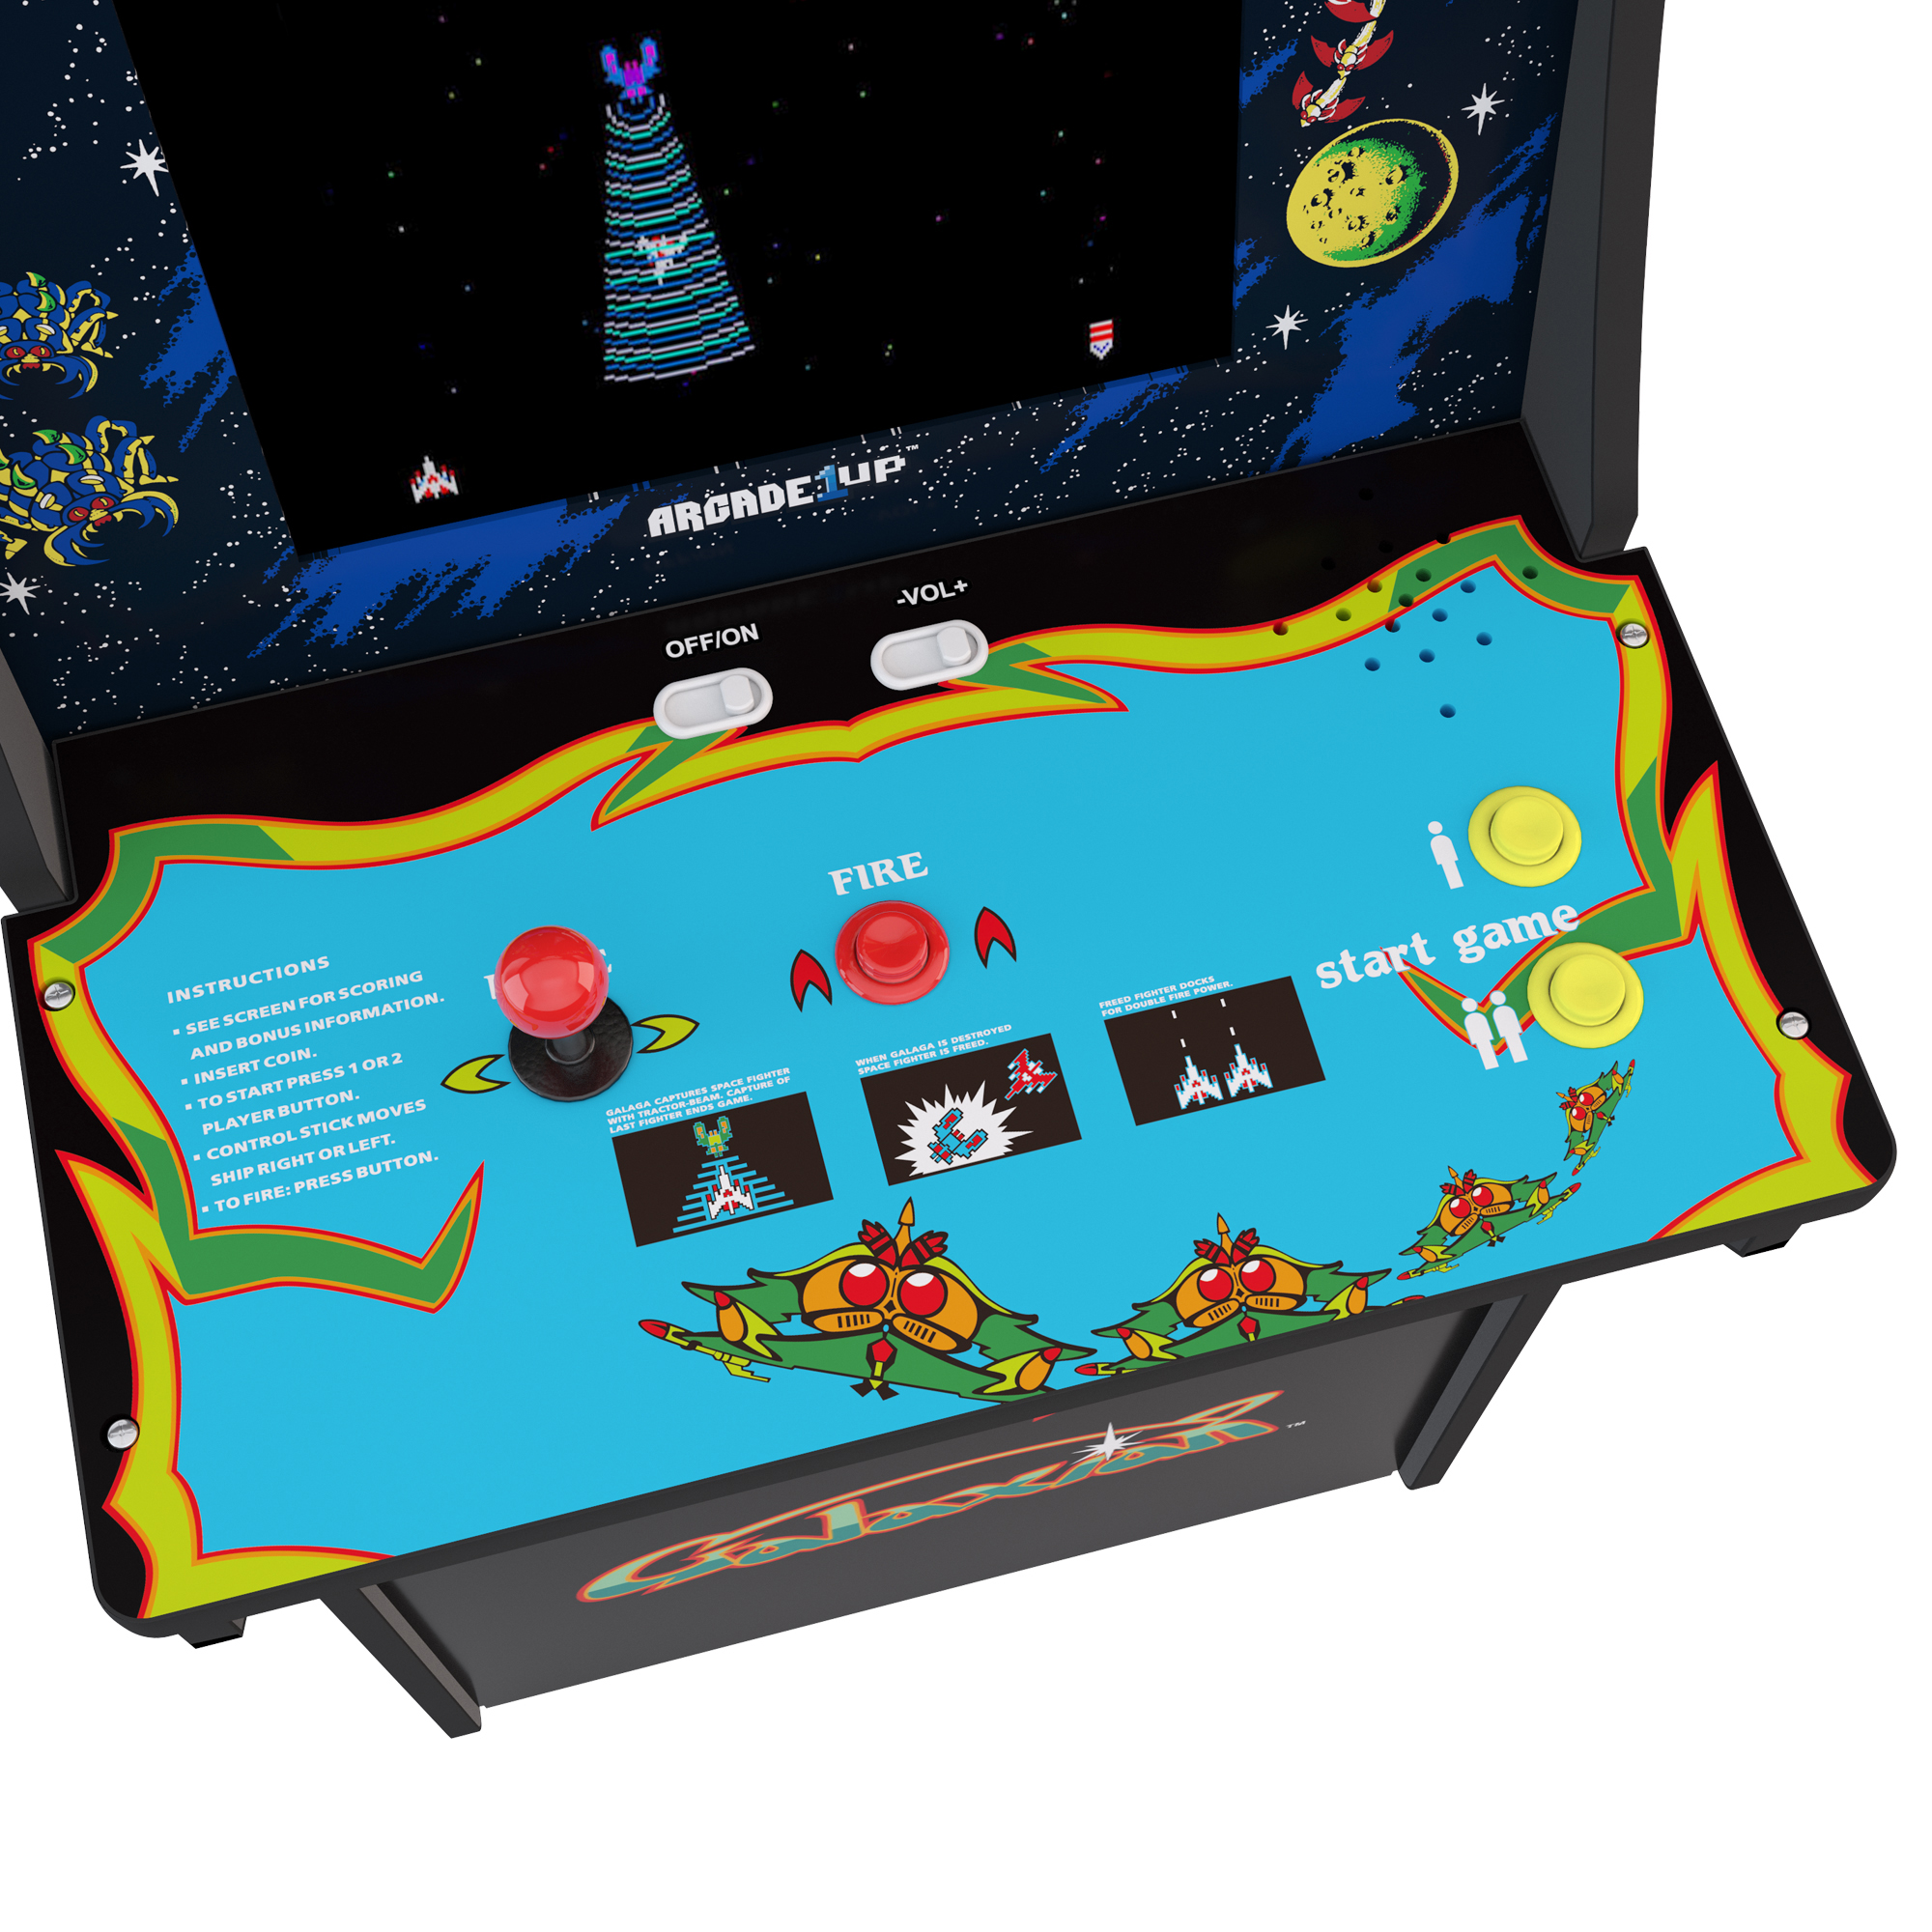 Galaga Arcade Machine with Riser, Arcade1UP - image 3 of 4